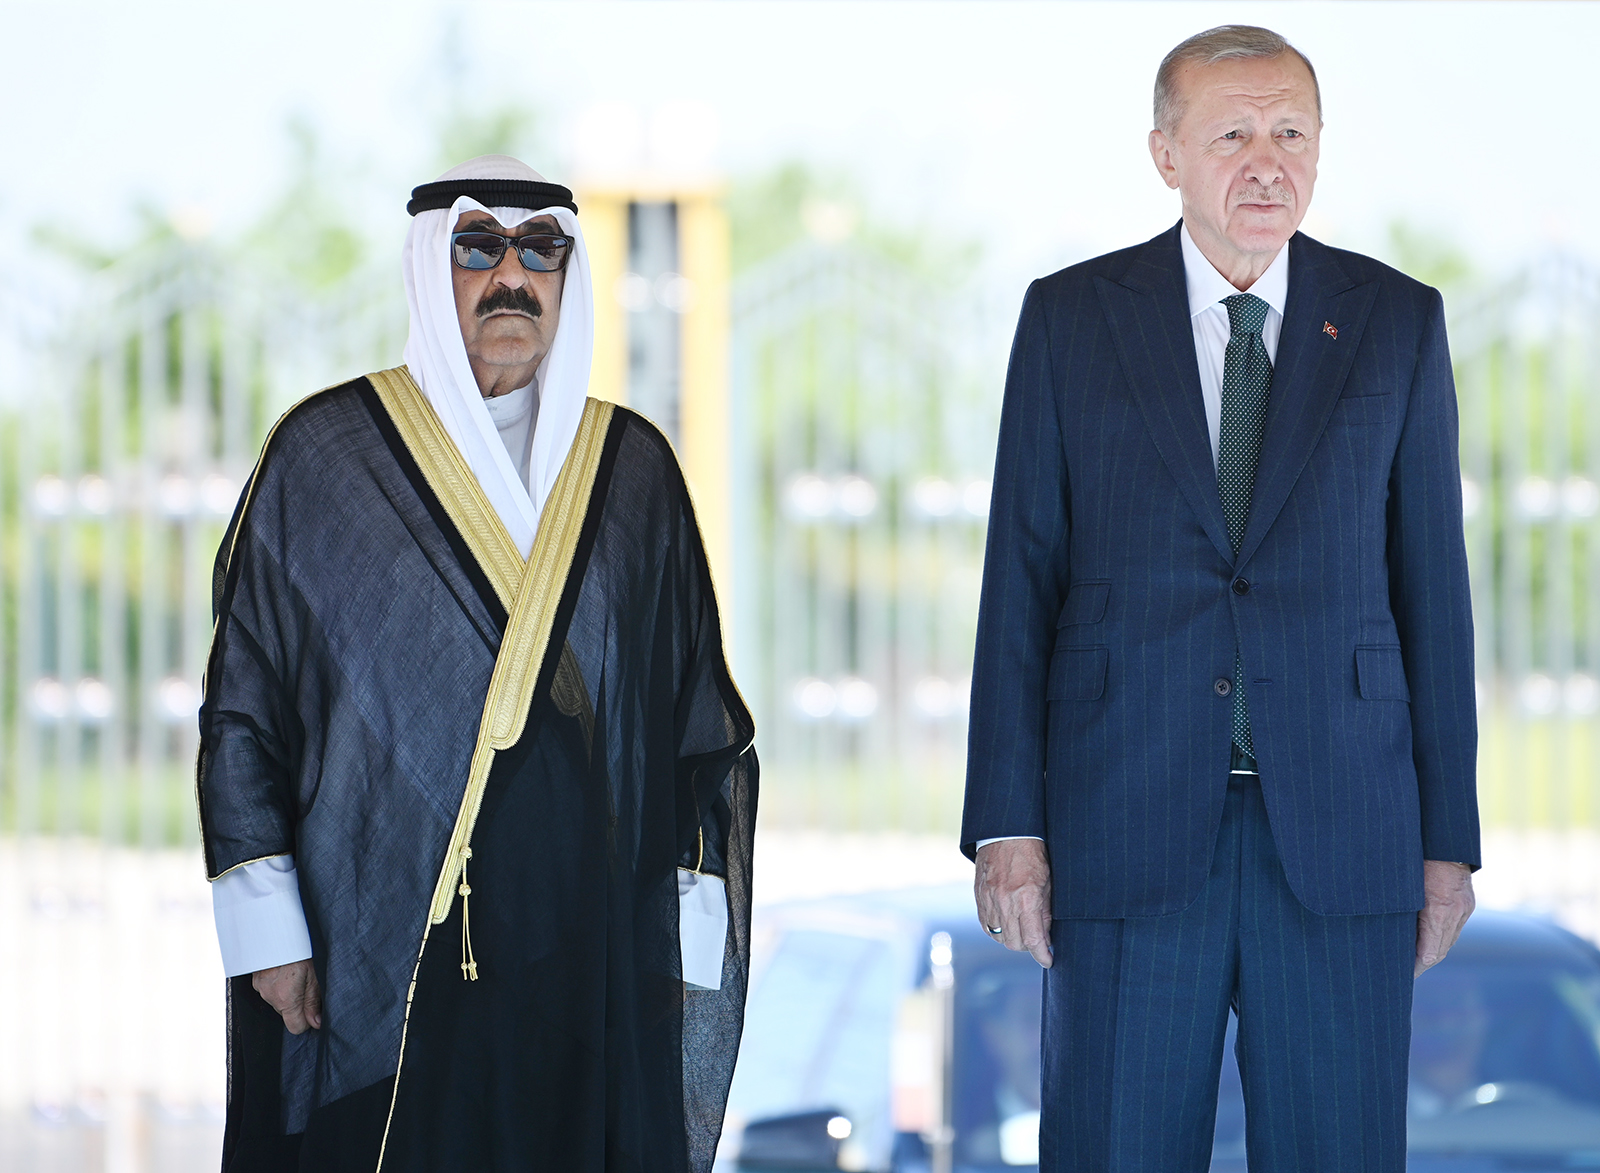 His Highness the Amir of Kuwait Sheikh Meshal Al-Ahmad Al-Jaber Al-Sabah with President Recep Tayyip Erdogan